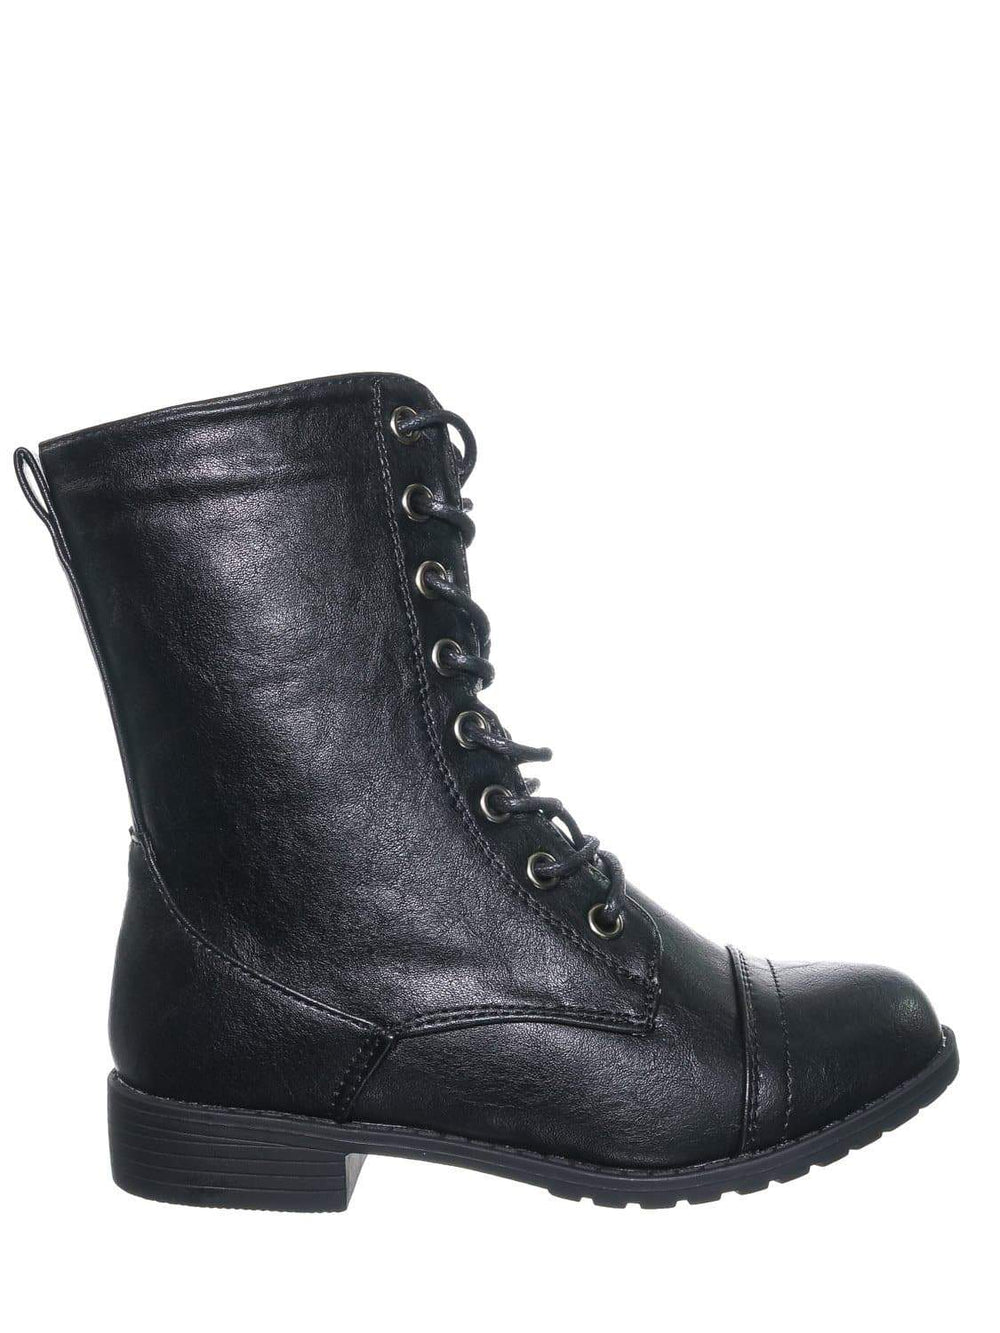 black boots for kids girls